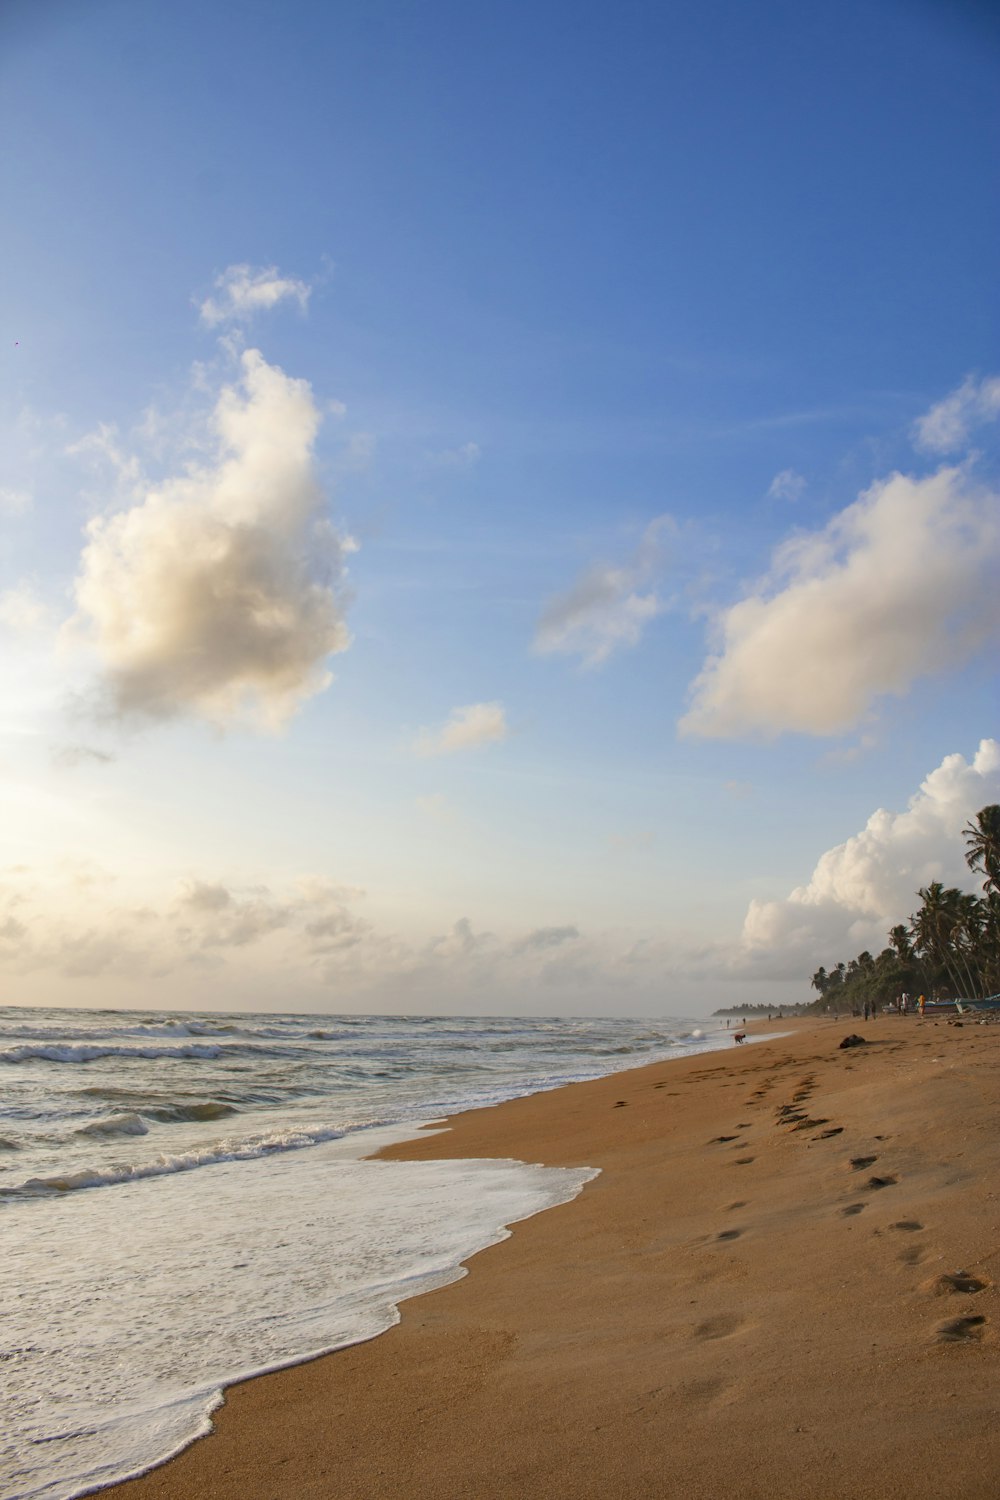 a sandy beach with trees and blue sky